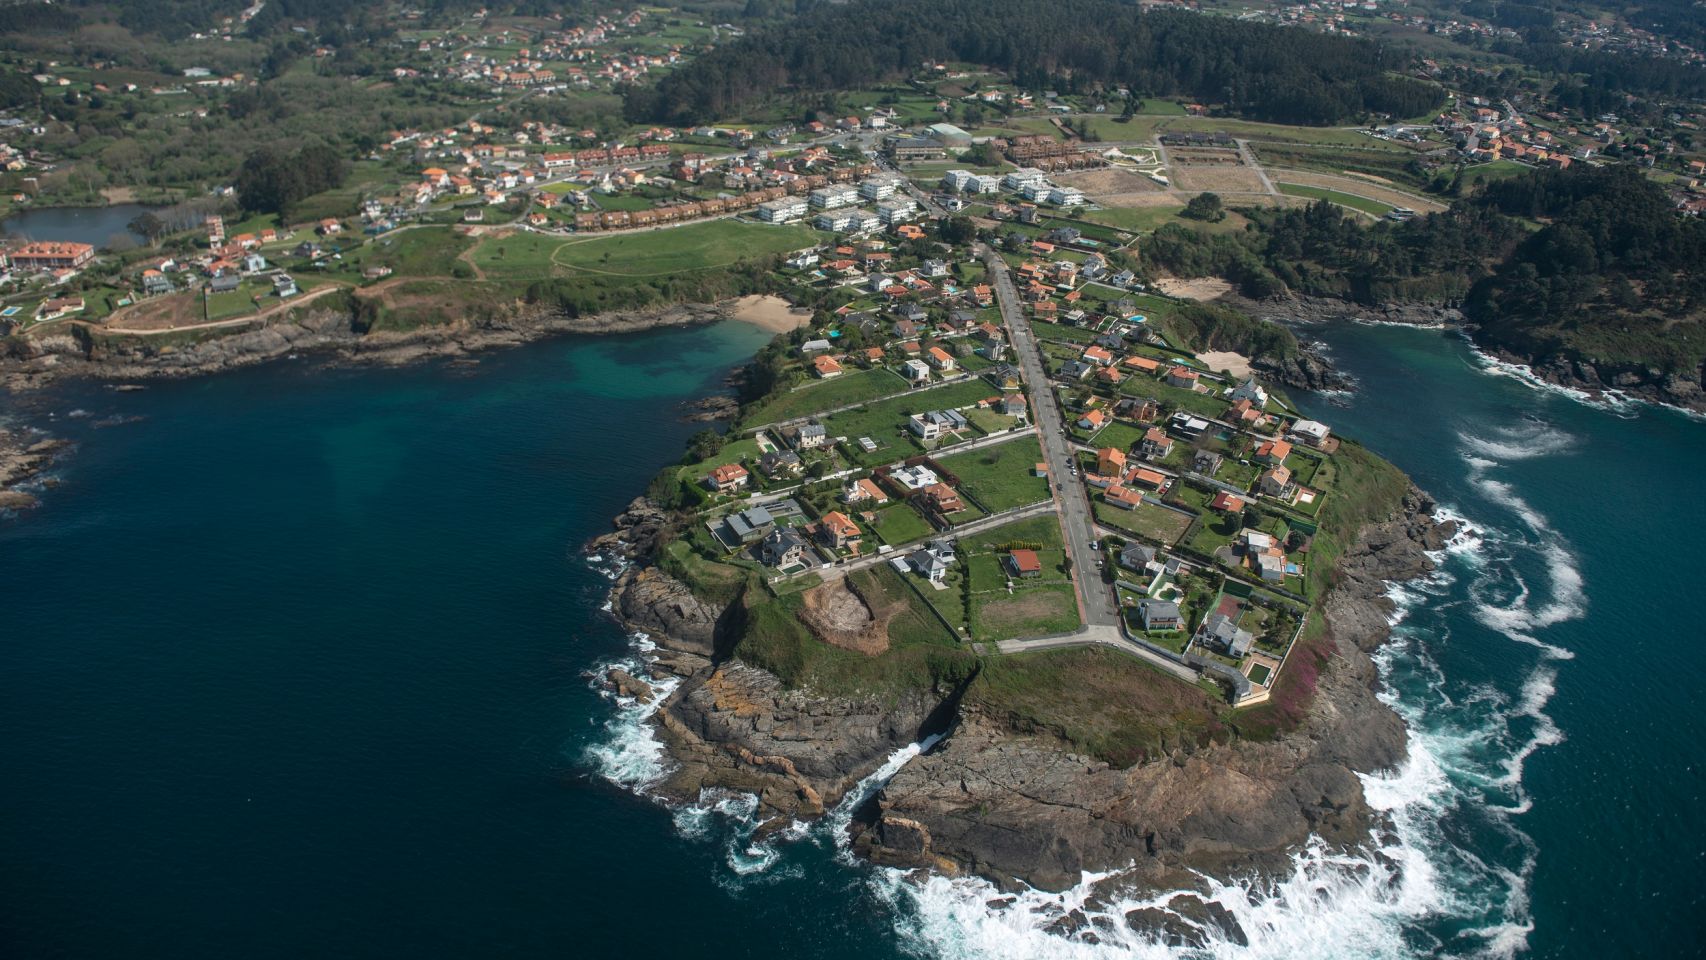 Vista aérea de Punta Canide, en el municipio coruñés de Oleiros.